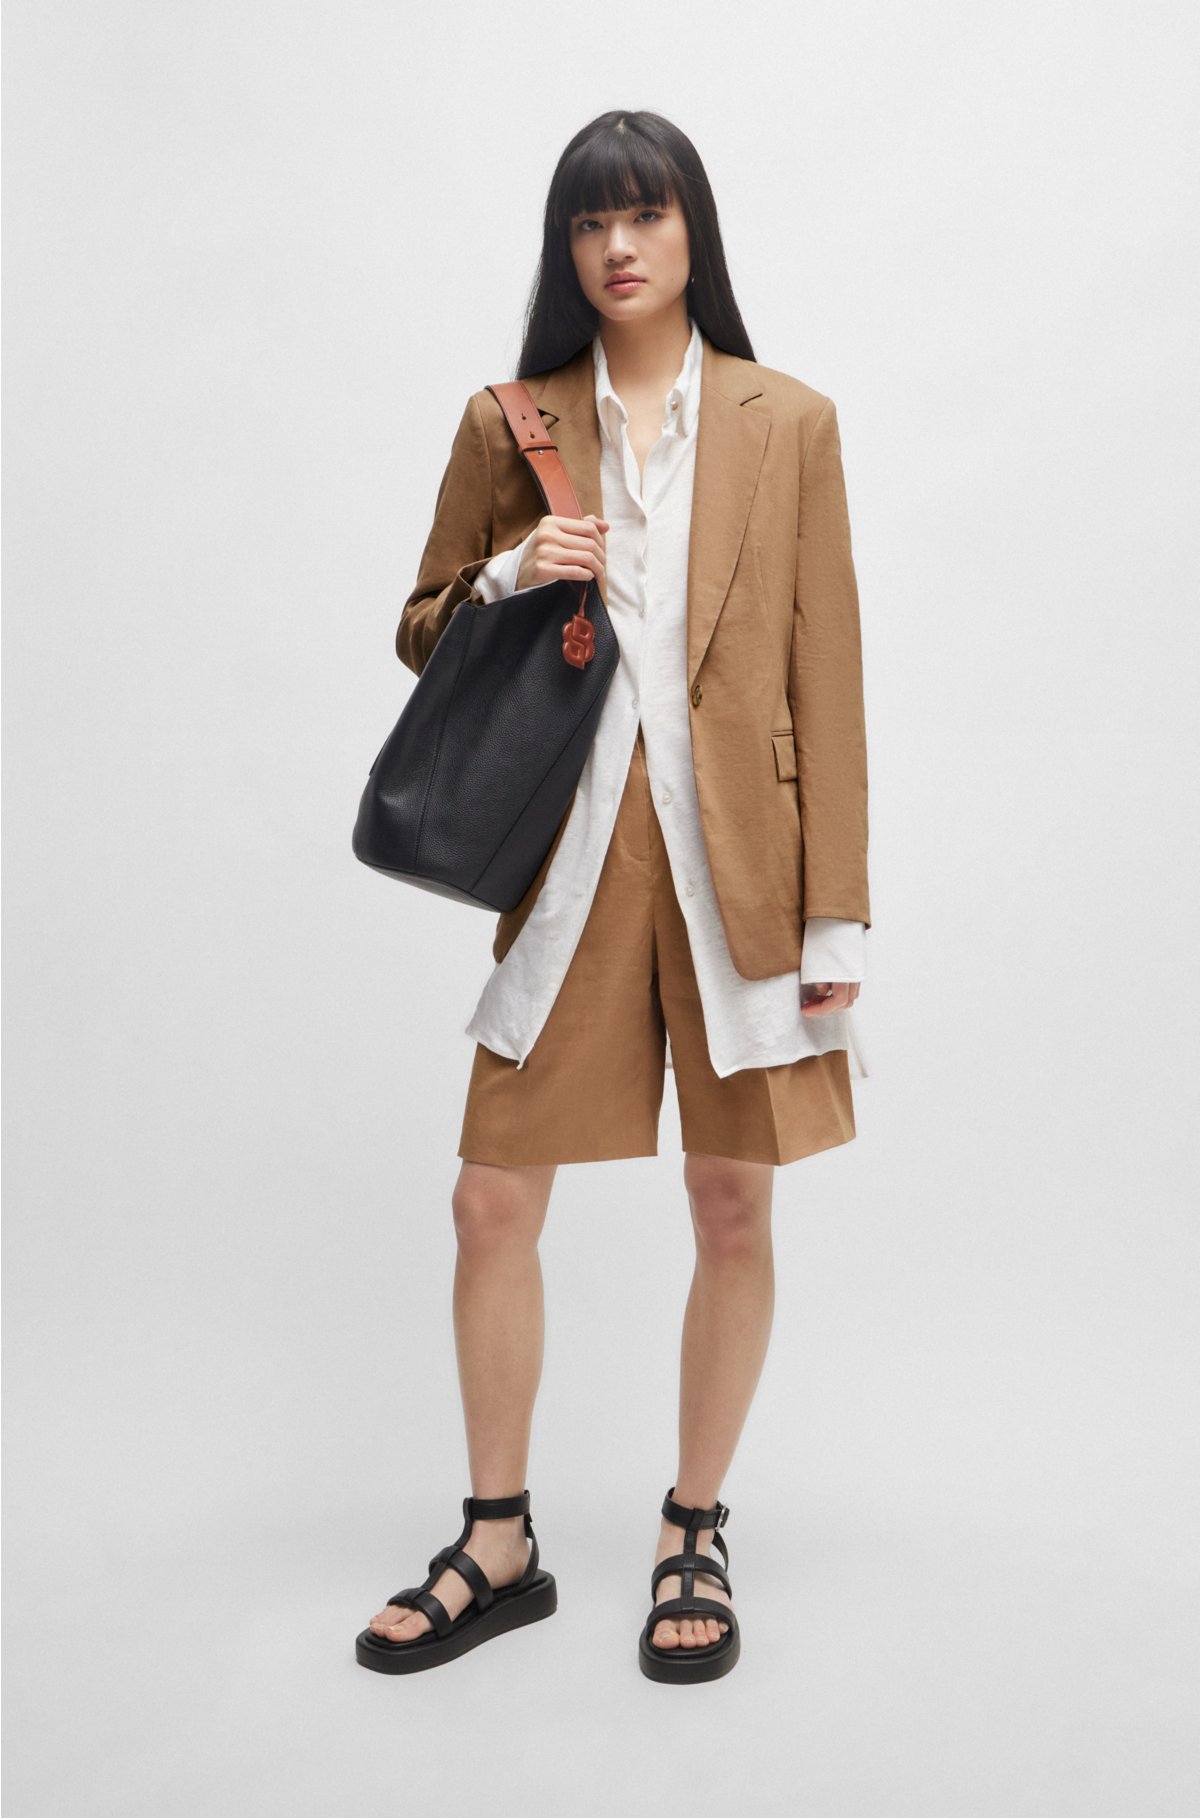 Regular-fit jacket in a linen blend, Beige